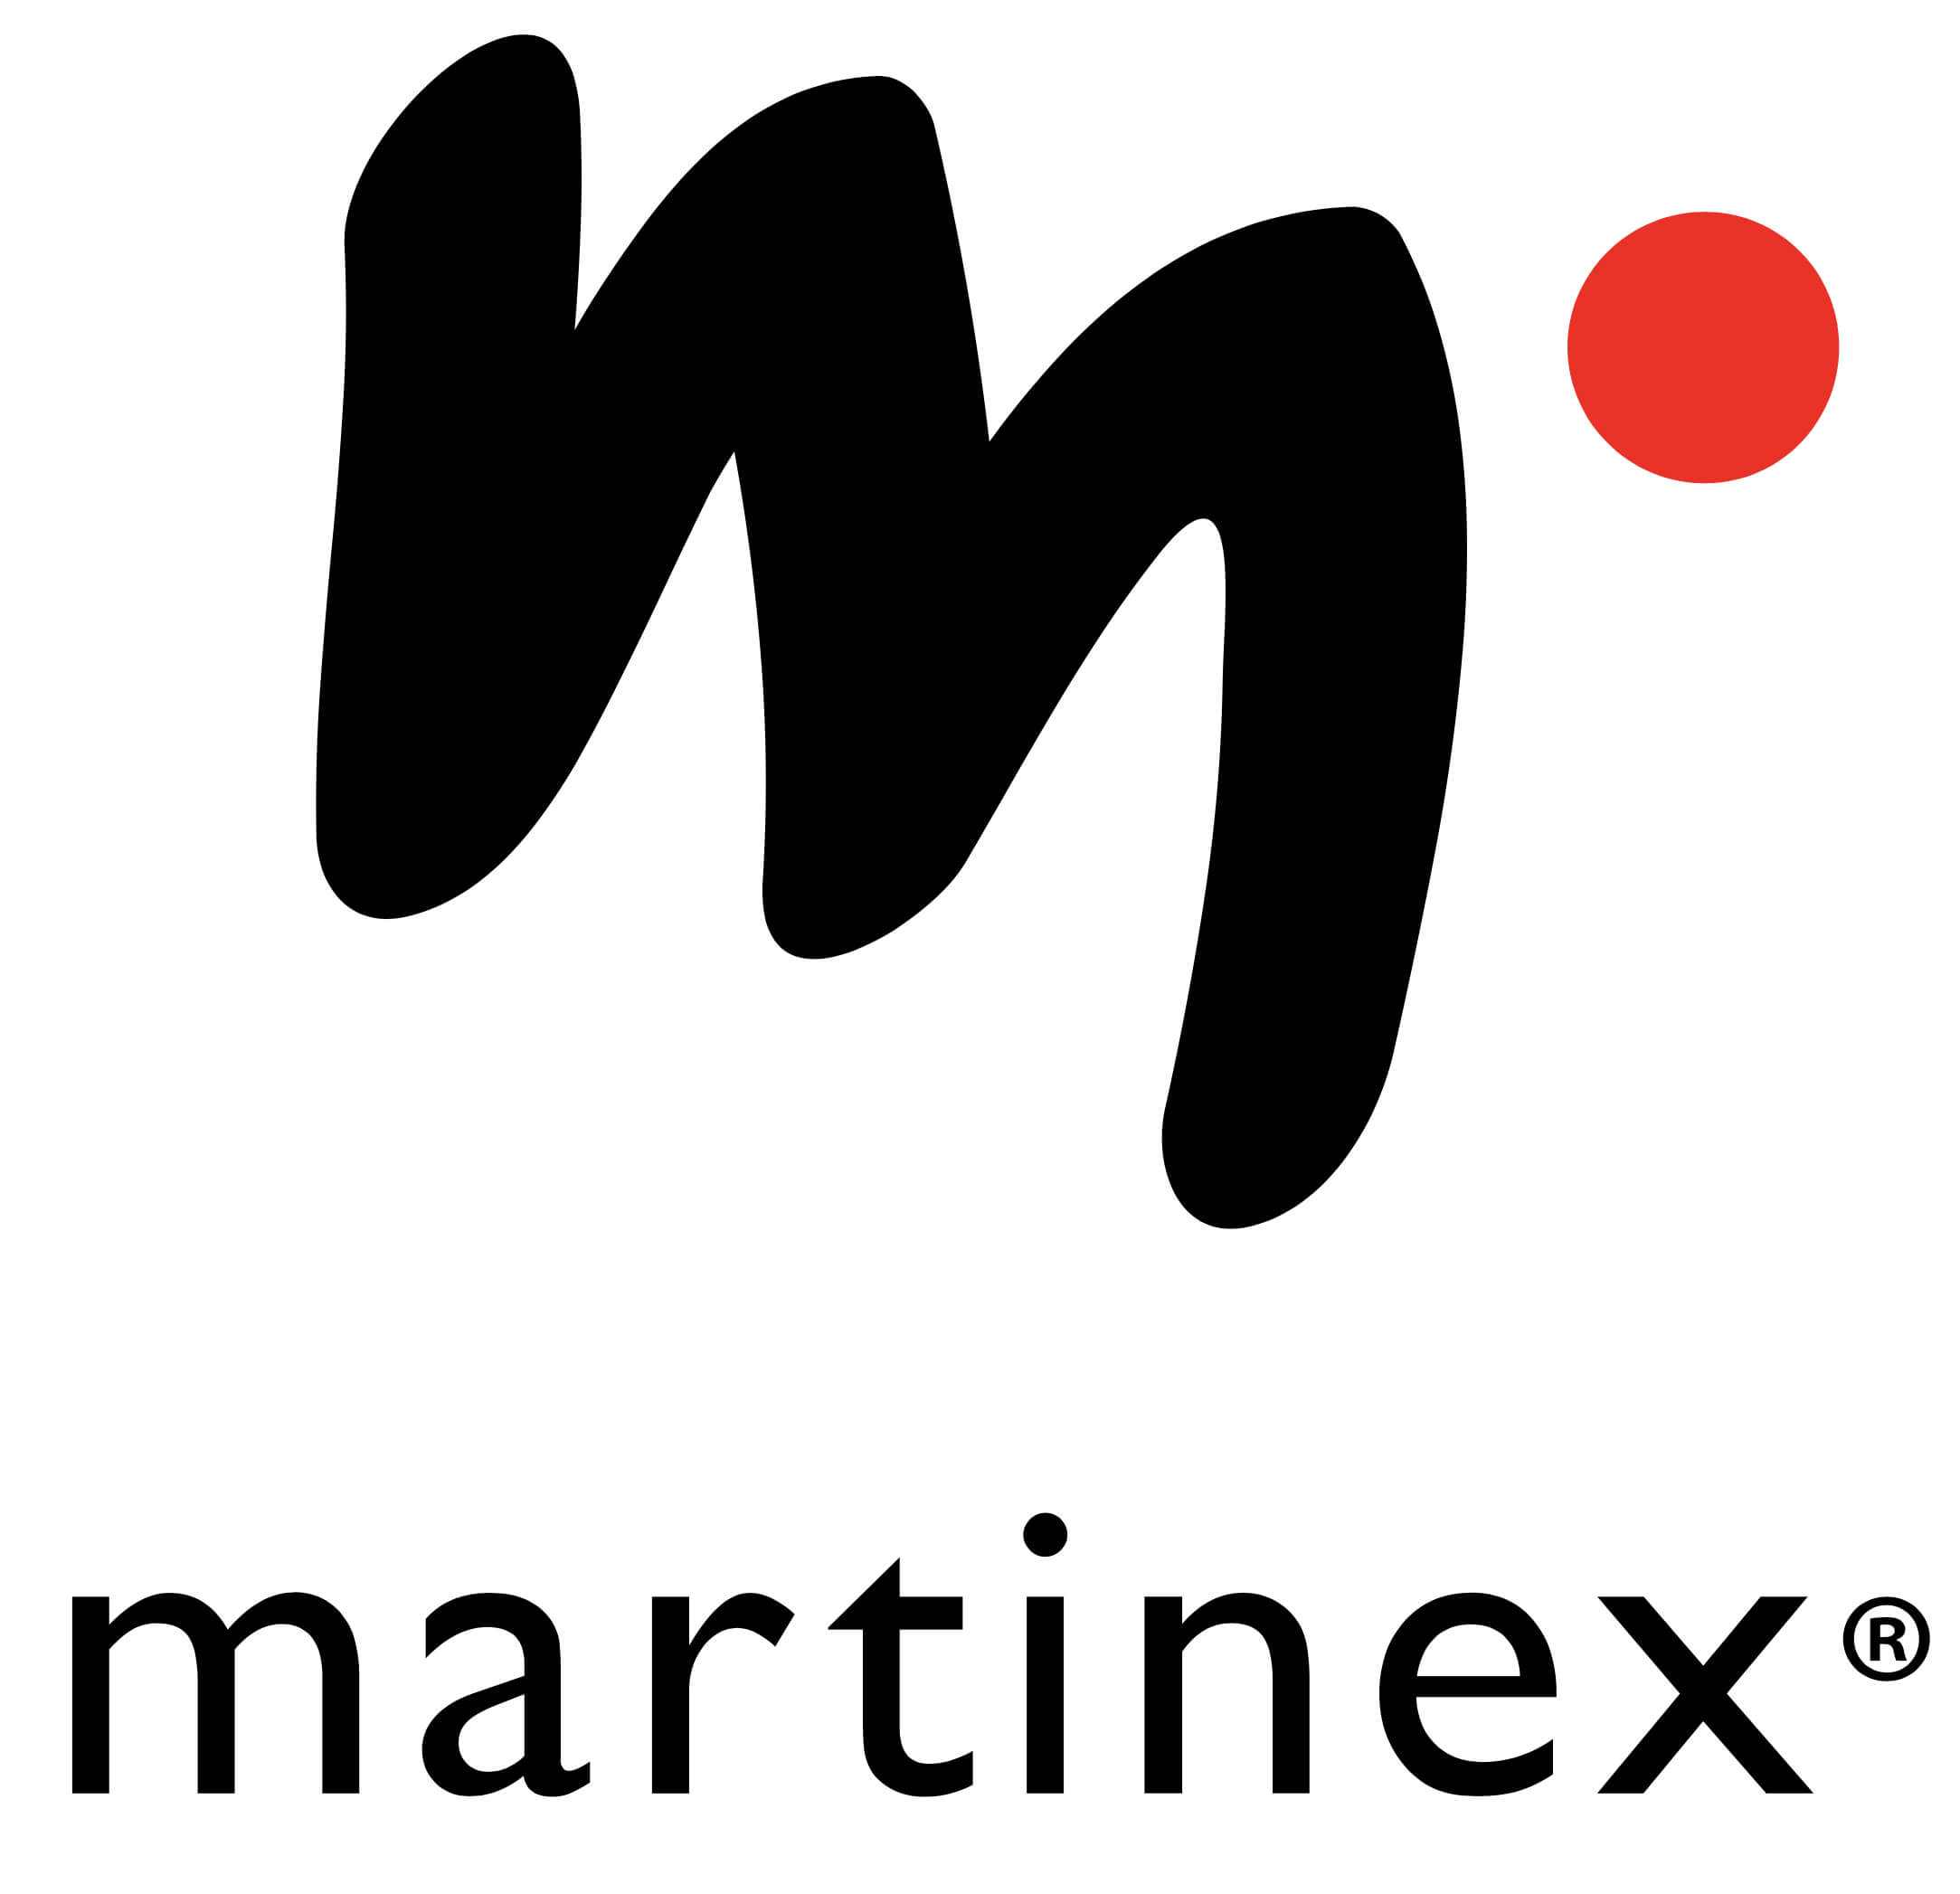 martinex - moomin